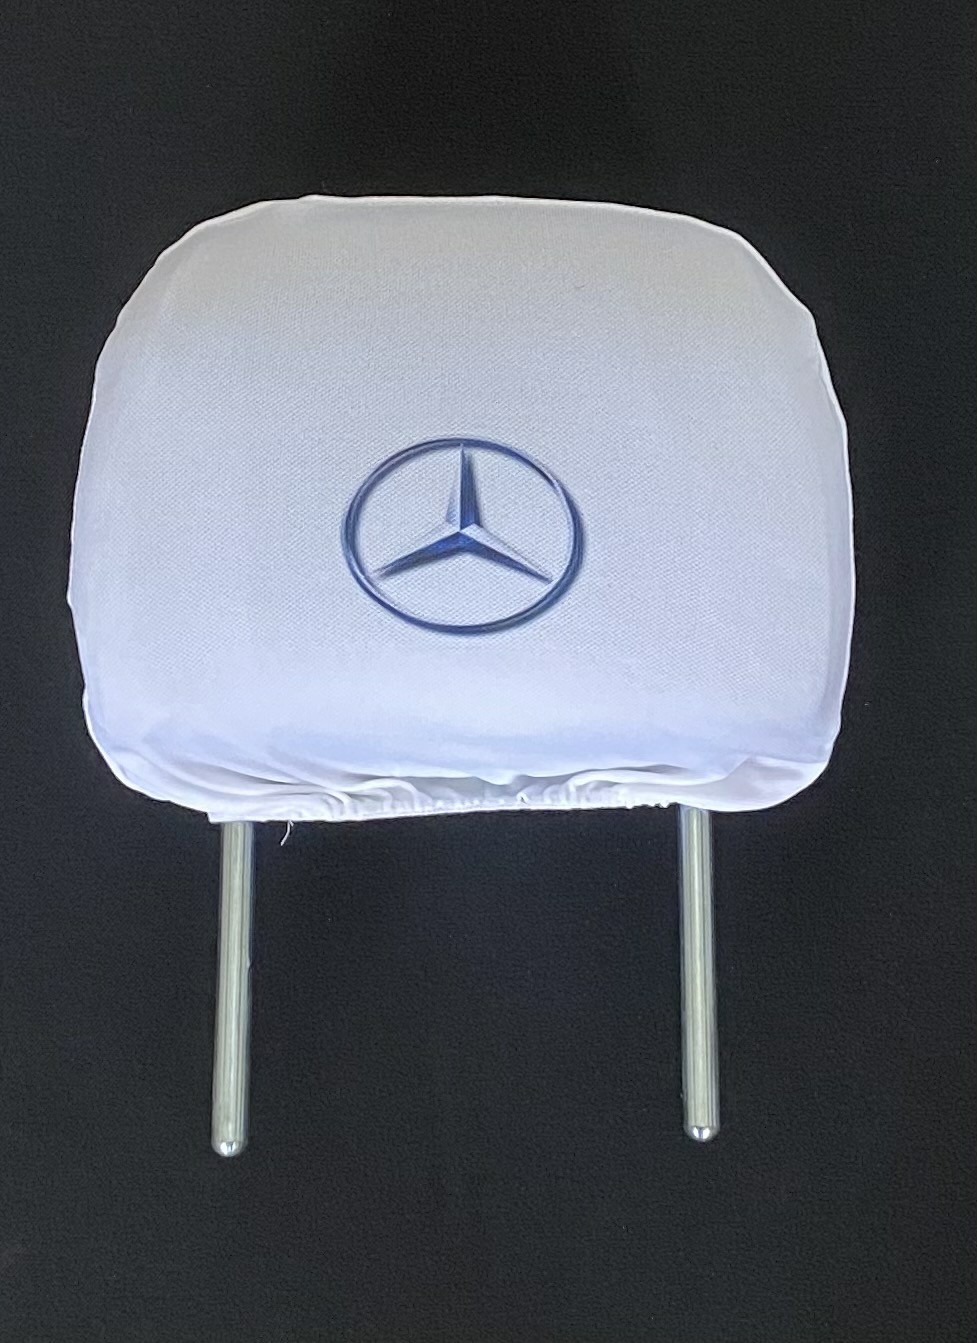 Biele návleky na opierky hlavy s logom Mercedes - 2ks